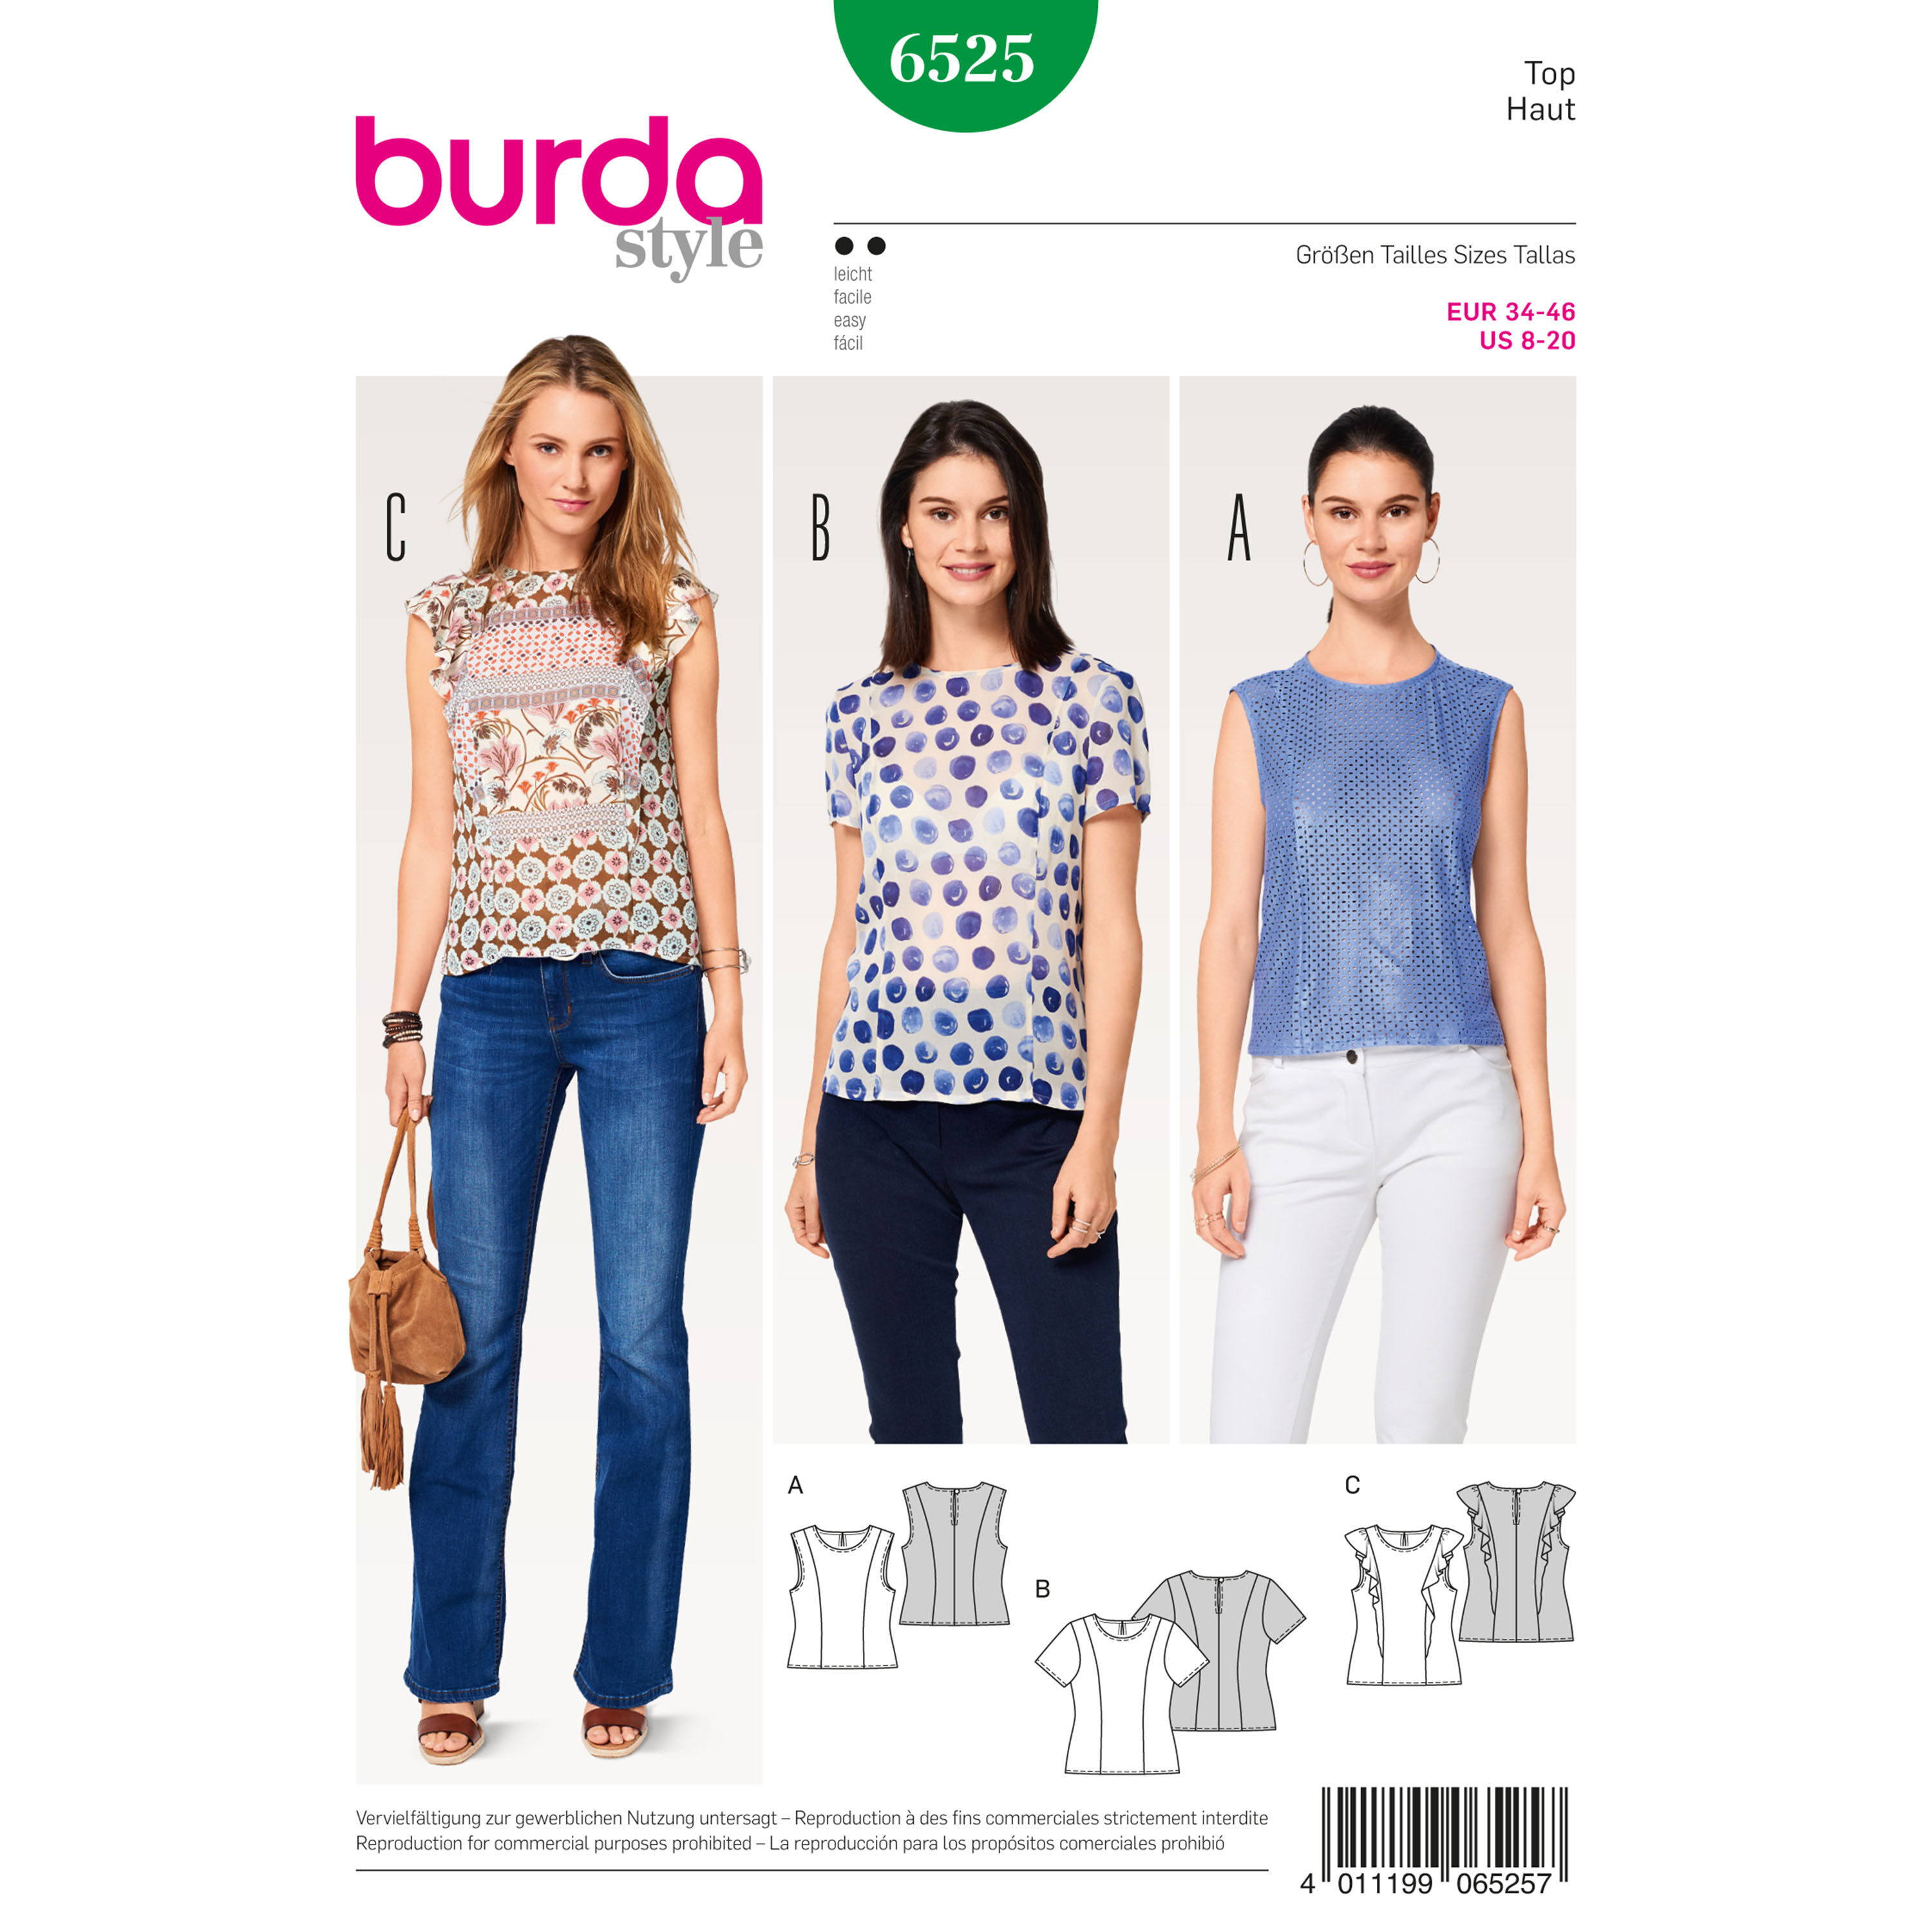 burda pattern book